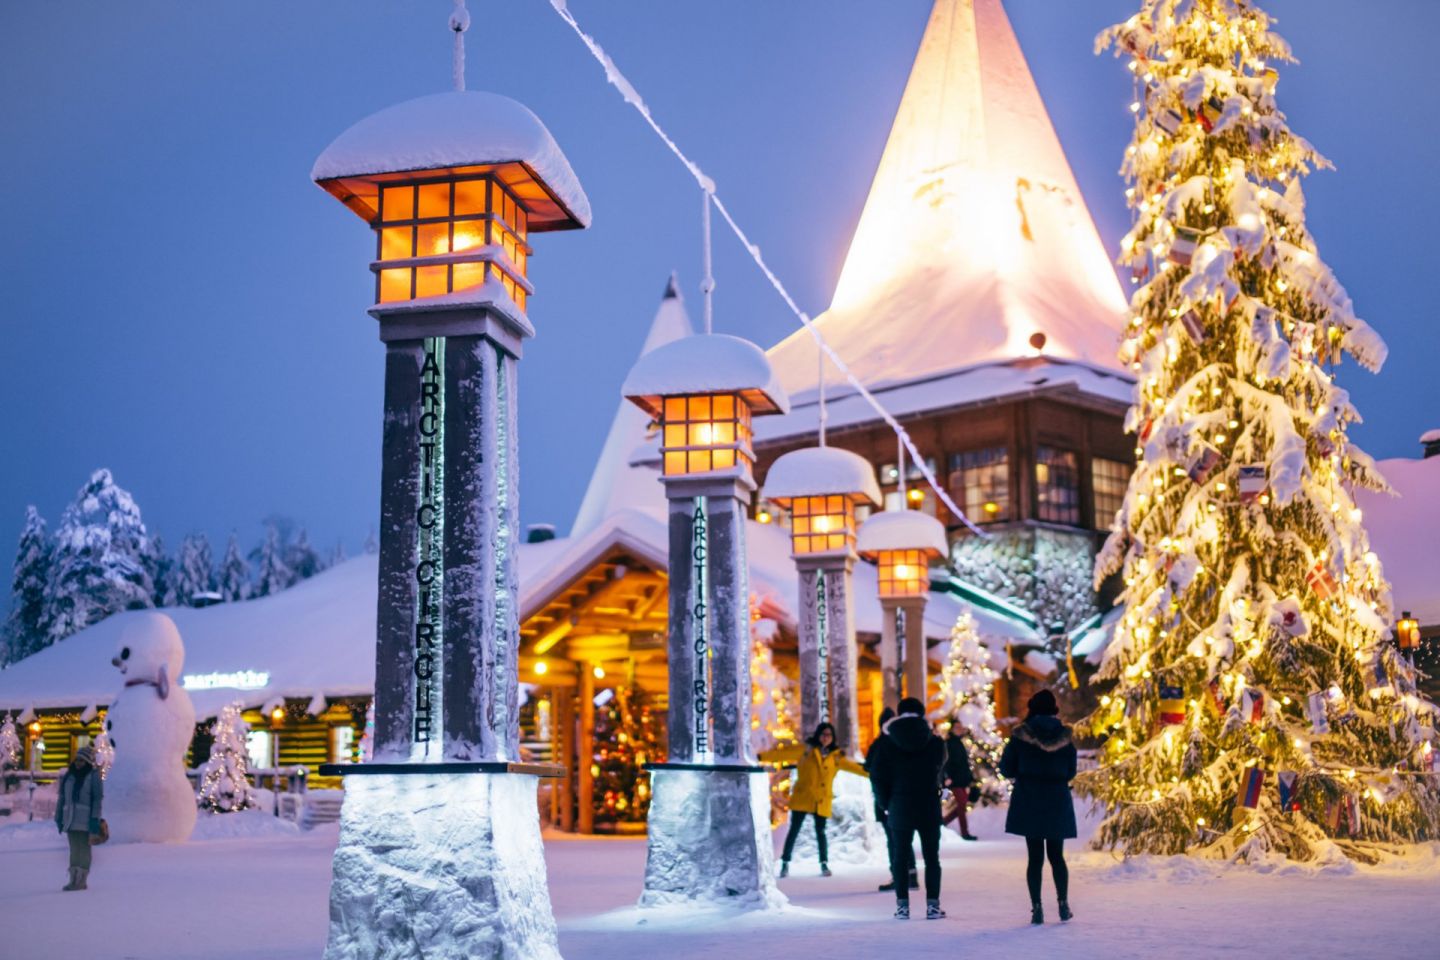 The Arctic Circle at Santa Claus Village in Rovaniemi, Finland in winter